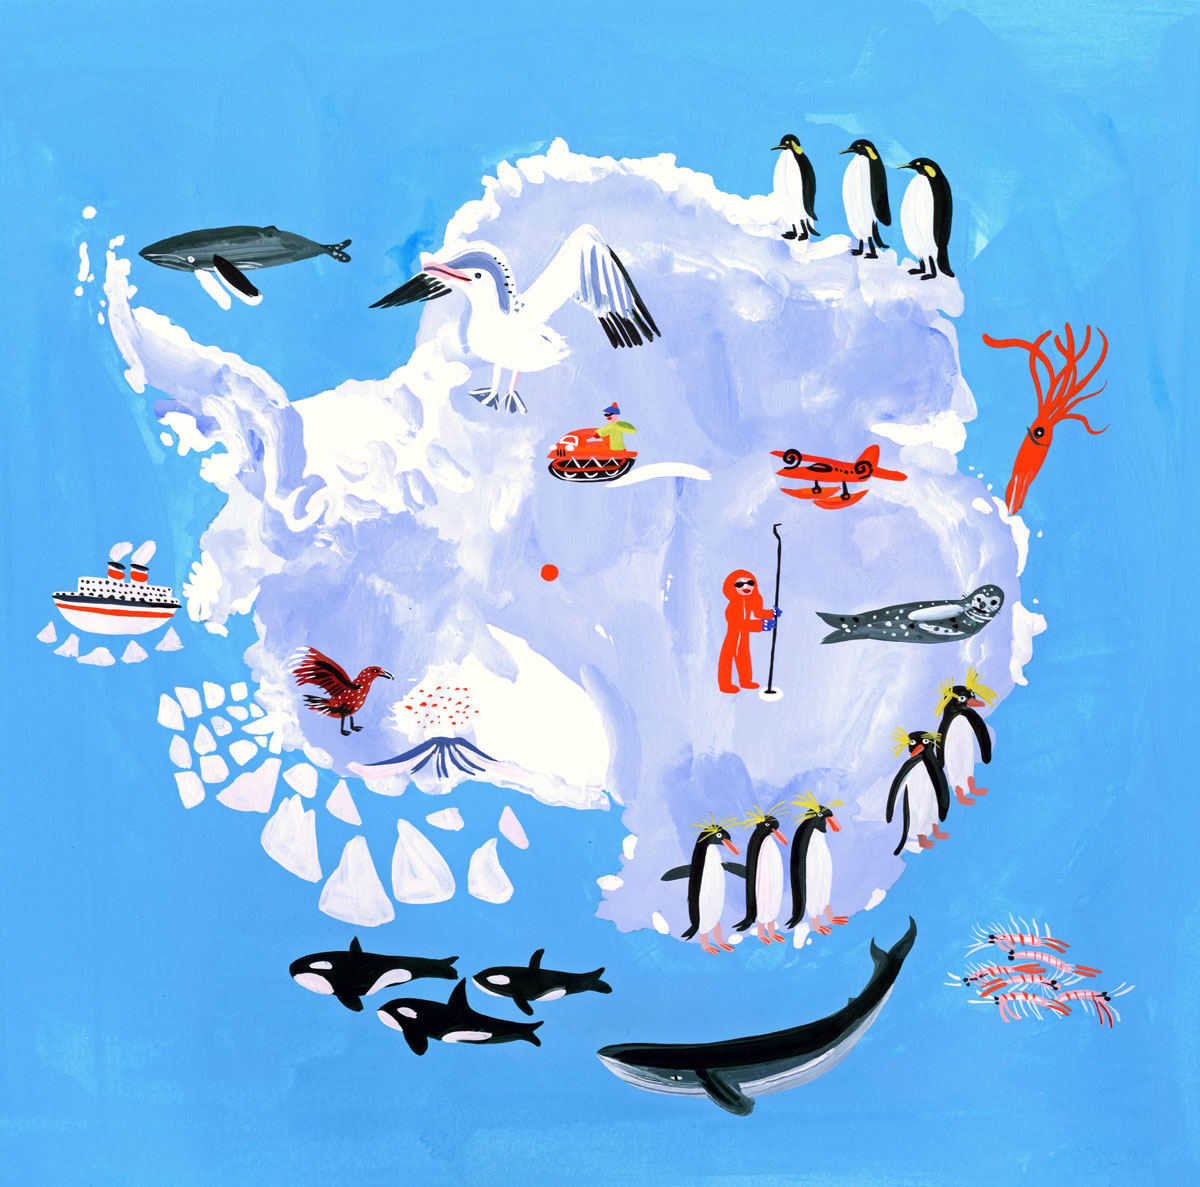 North travel. Арктика Антарктика Антарктида для детей. Карта Антарктиды для детей дошкольного возраста. Континент Антарктида для детей. Антарктида материк для детей.